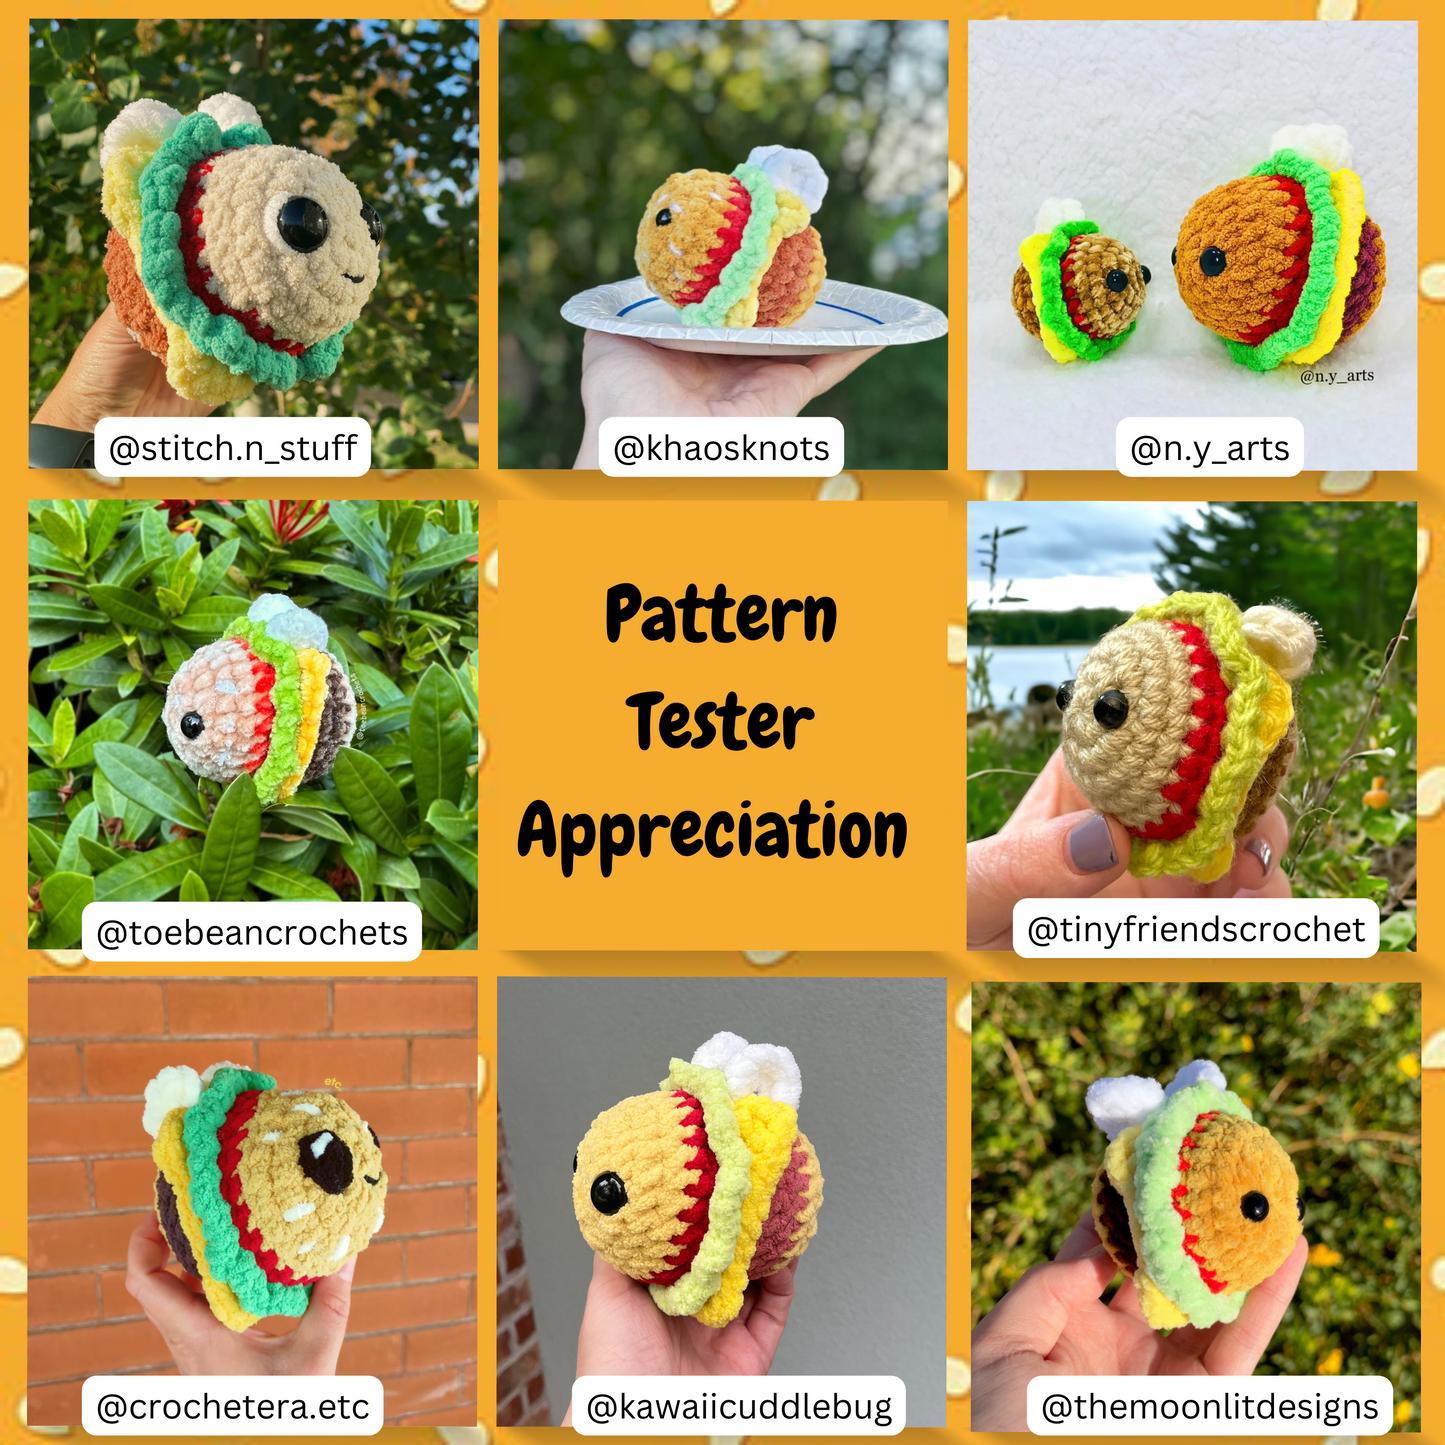 Ham-Bee-Ger Crochet Pattern